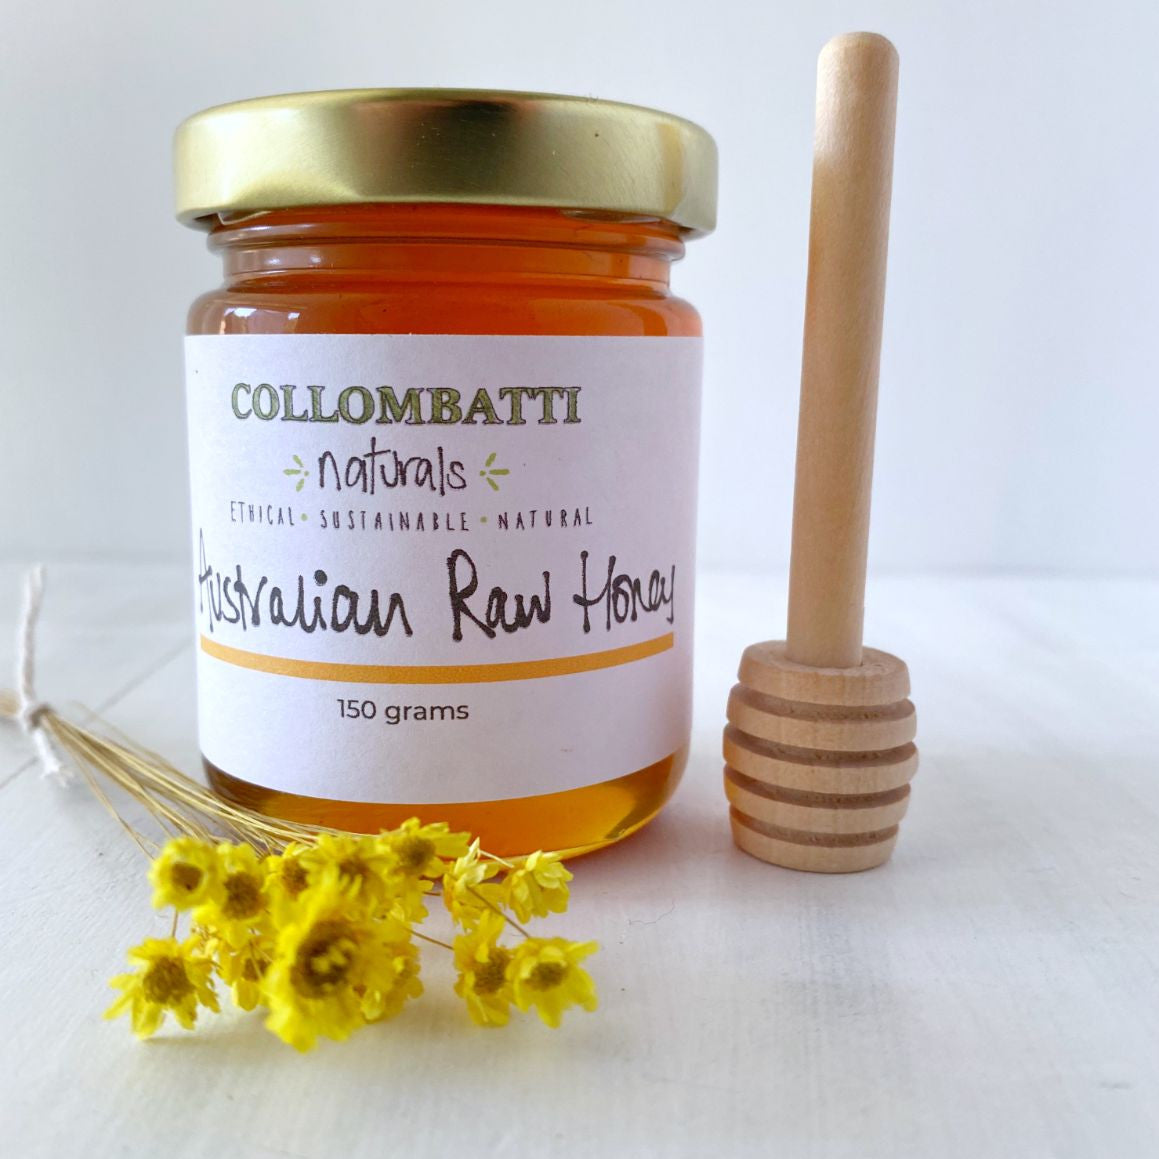 Collombatti Naturals raw Australian honey with wooden swizzle stick